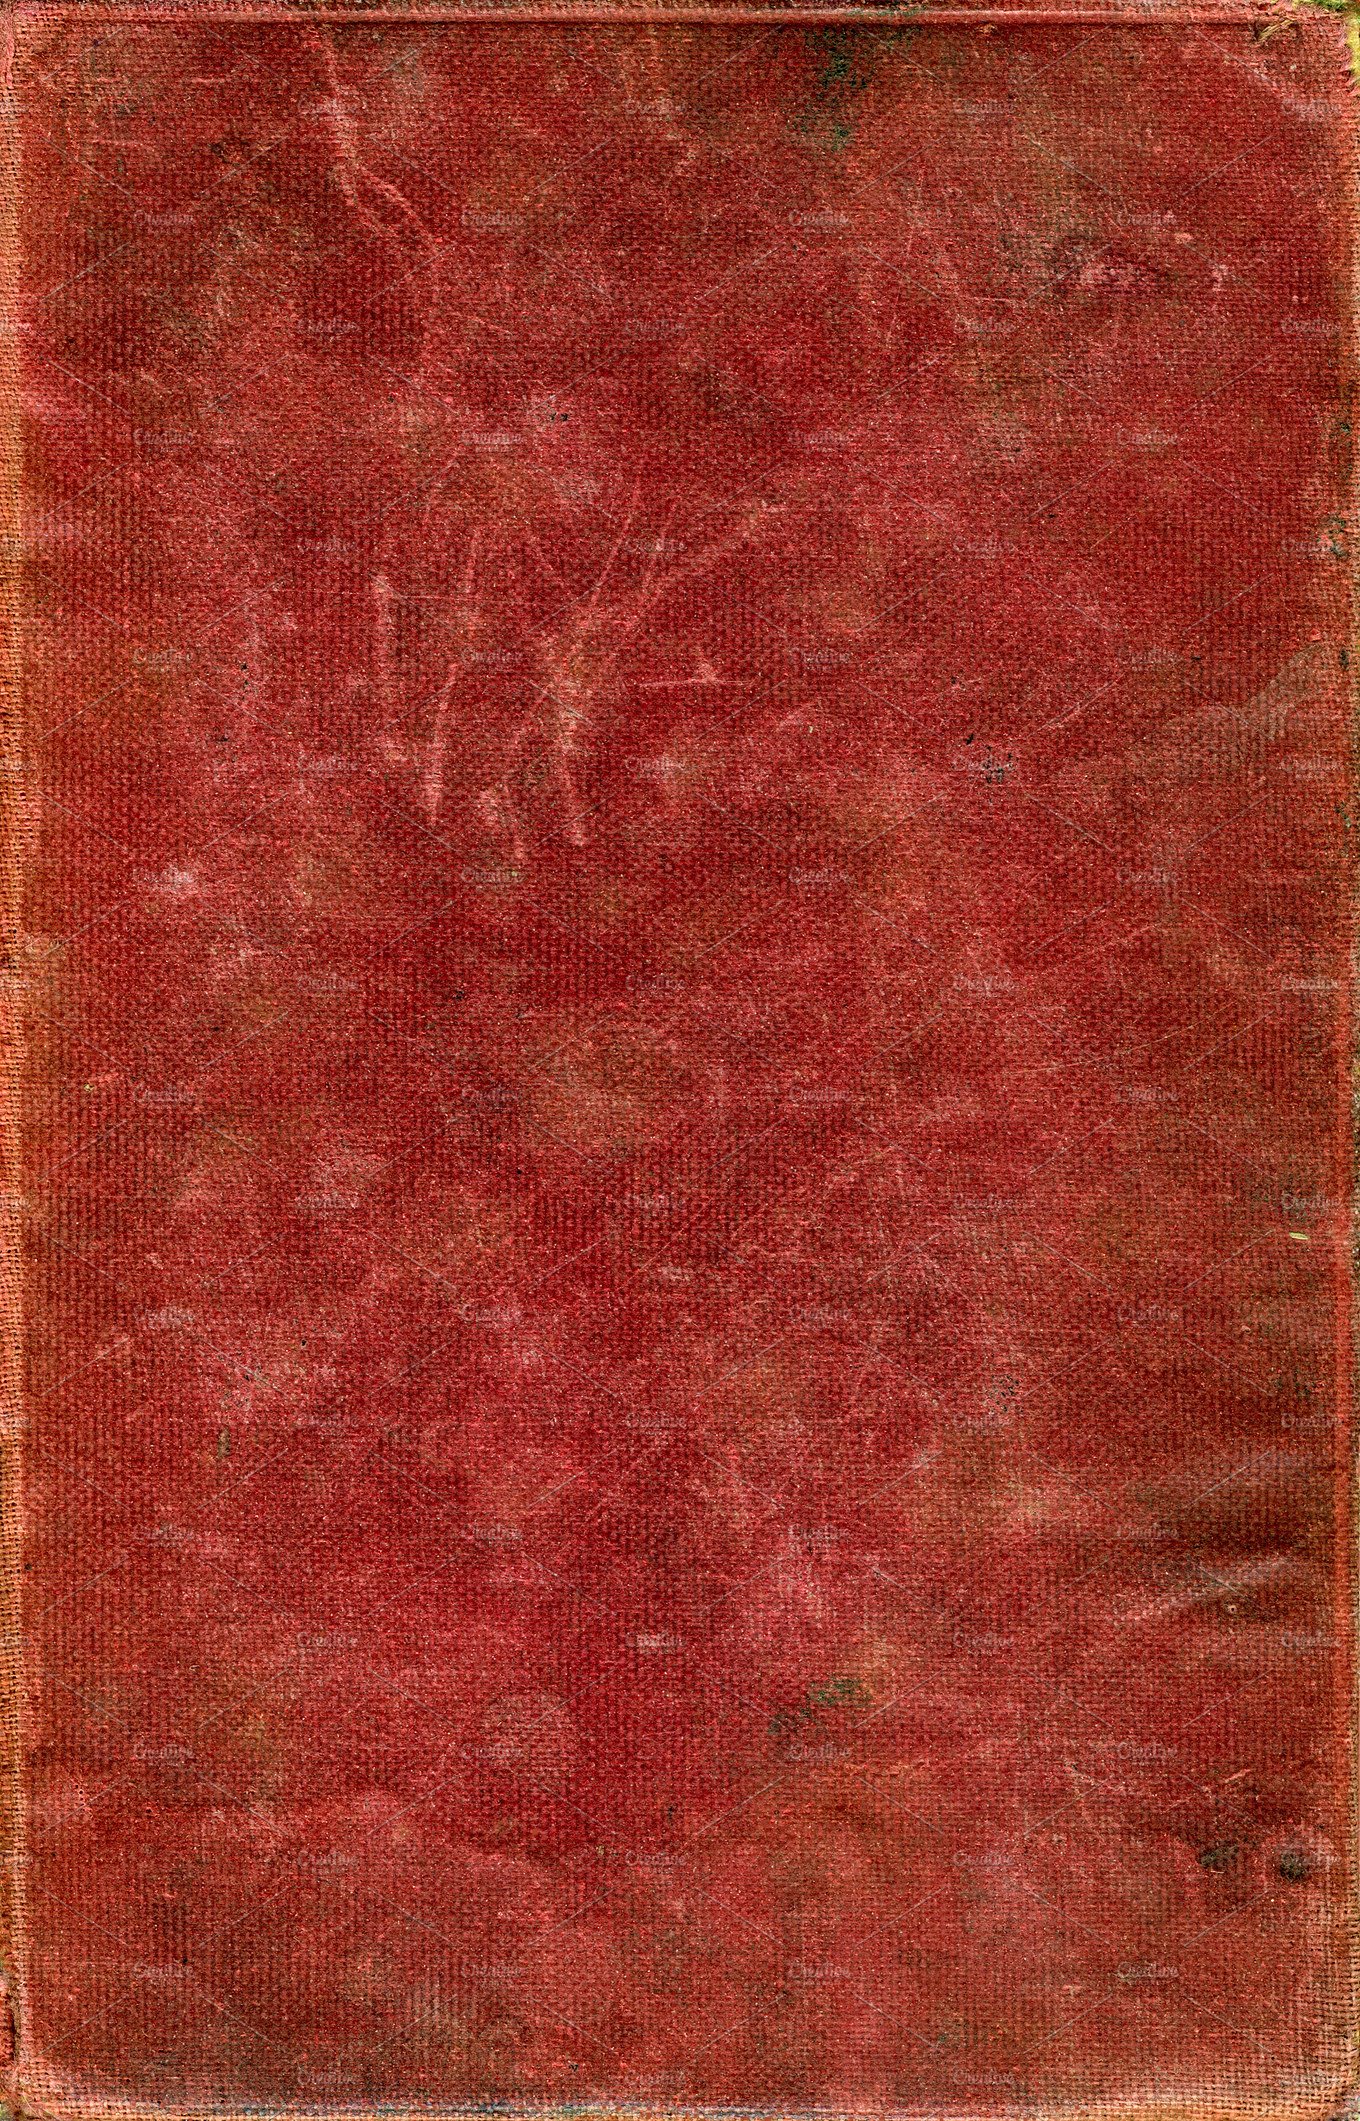 Old fabric book cover ~ Abstract Photos ~ Creative Market